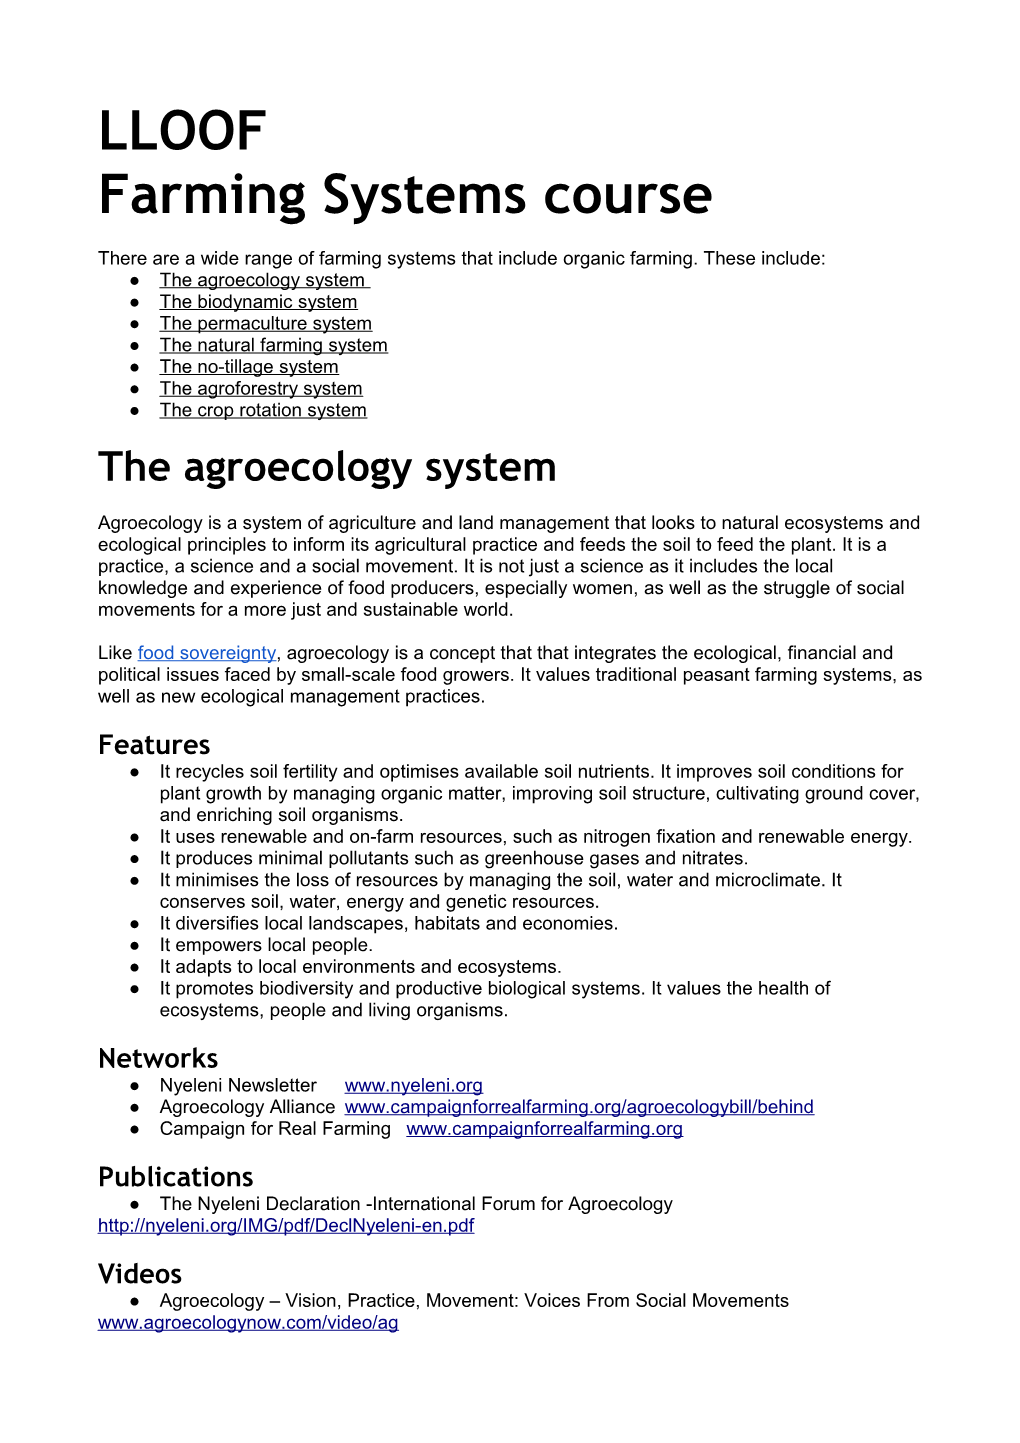 Farming Systems Course